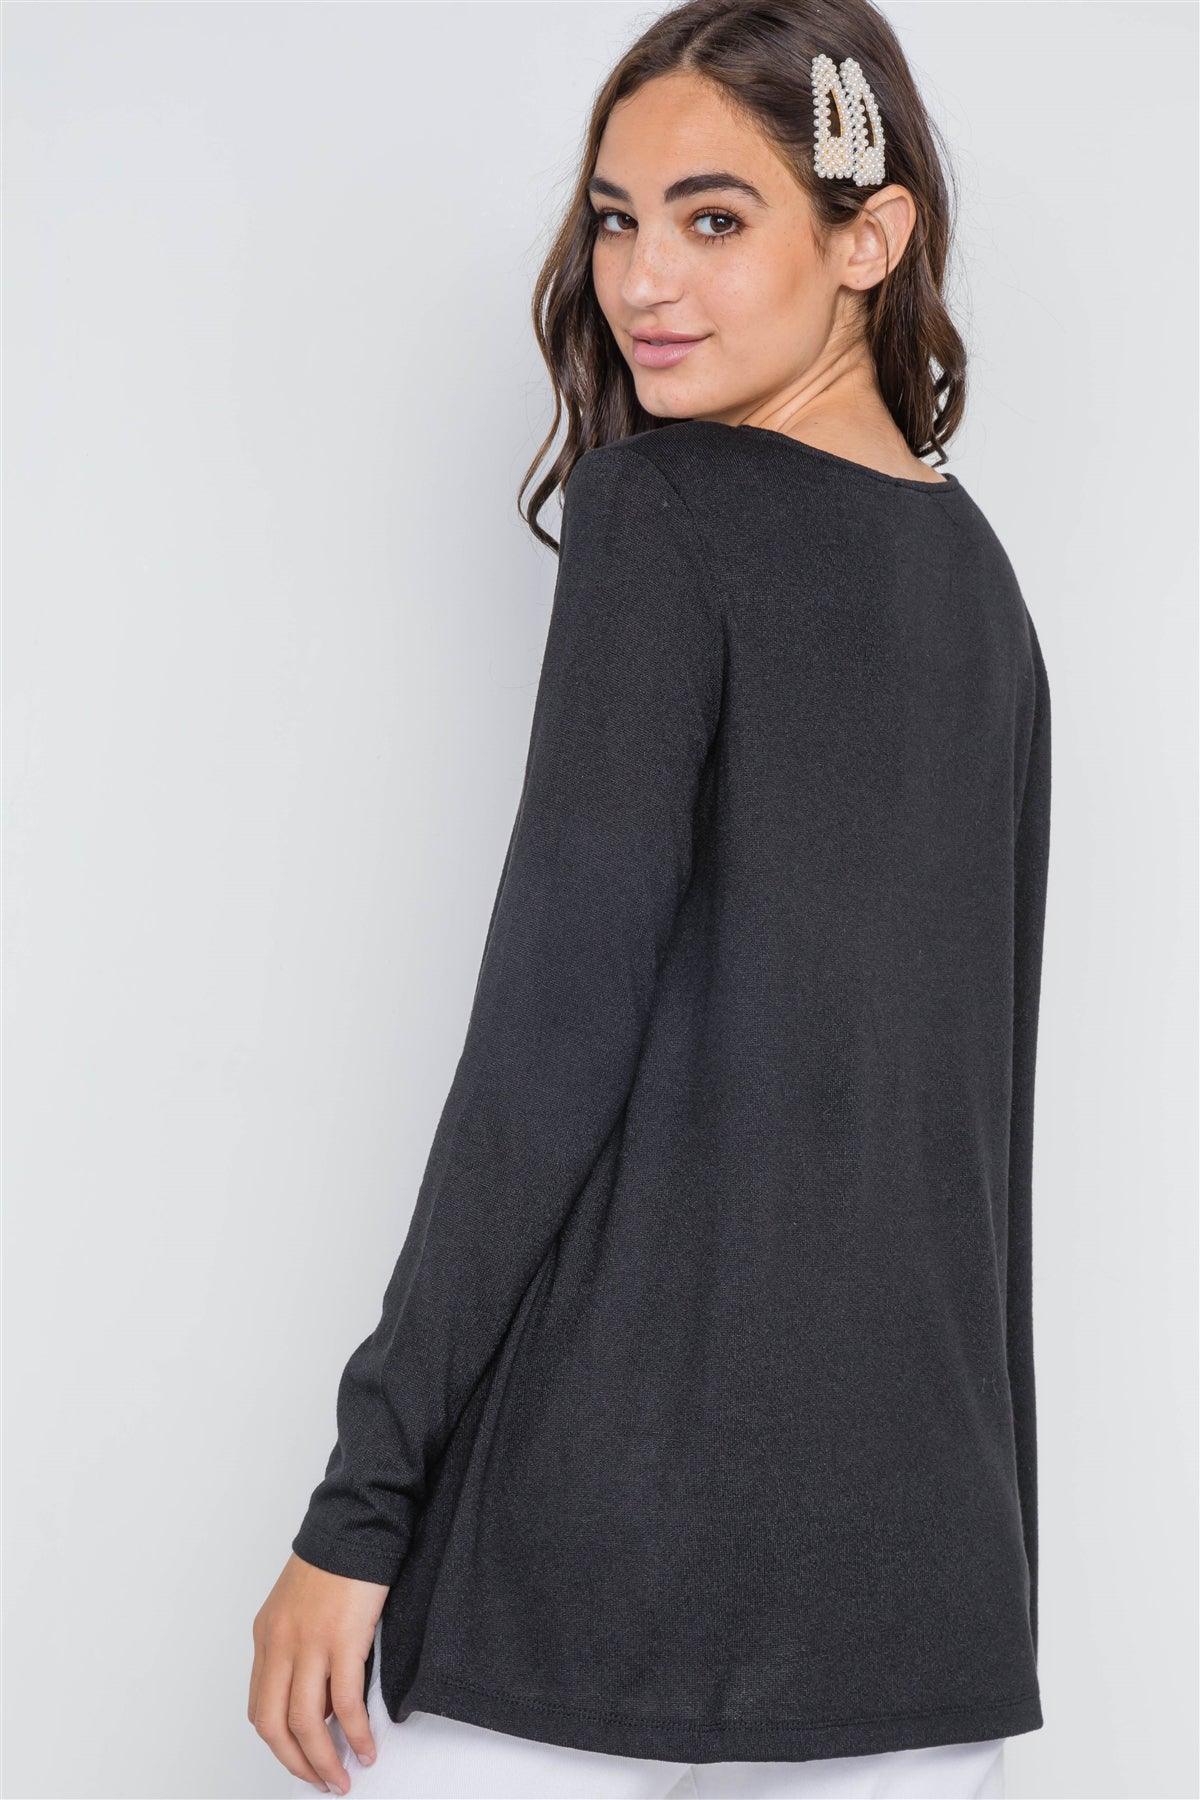 Black Long Sleeve Solid Asymmetrical Sweater /1-3-3